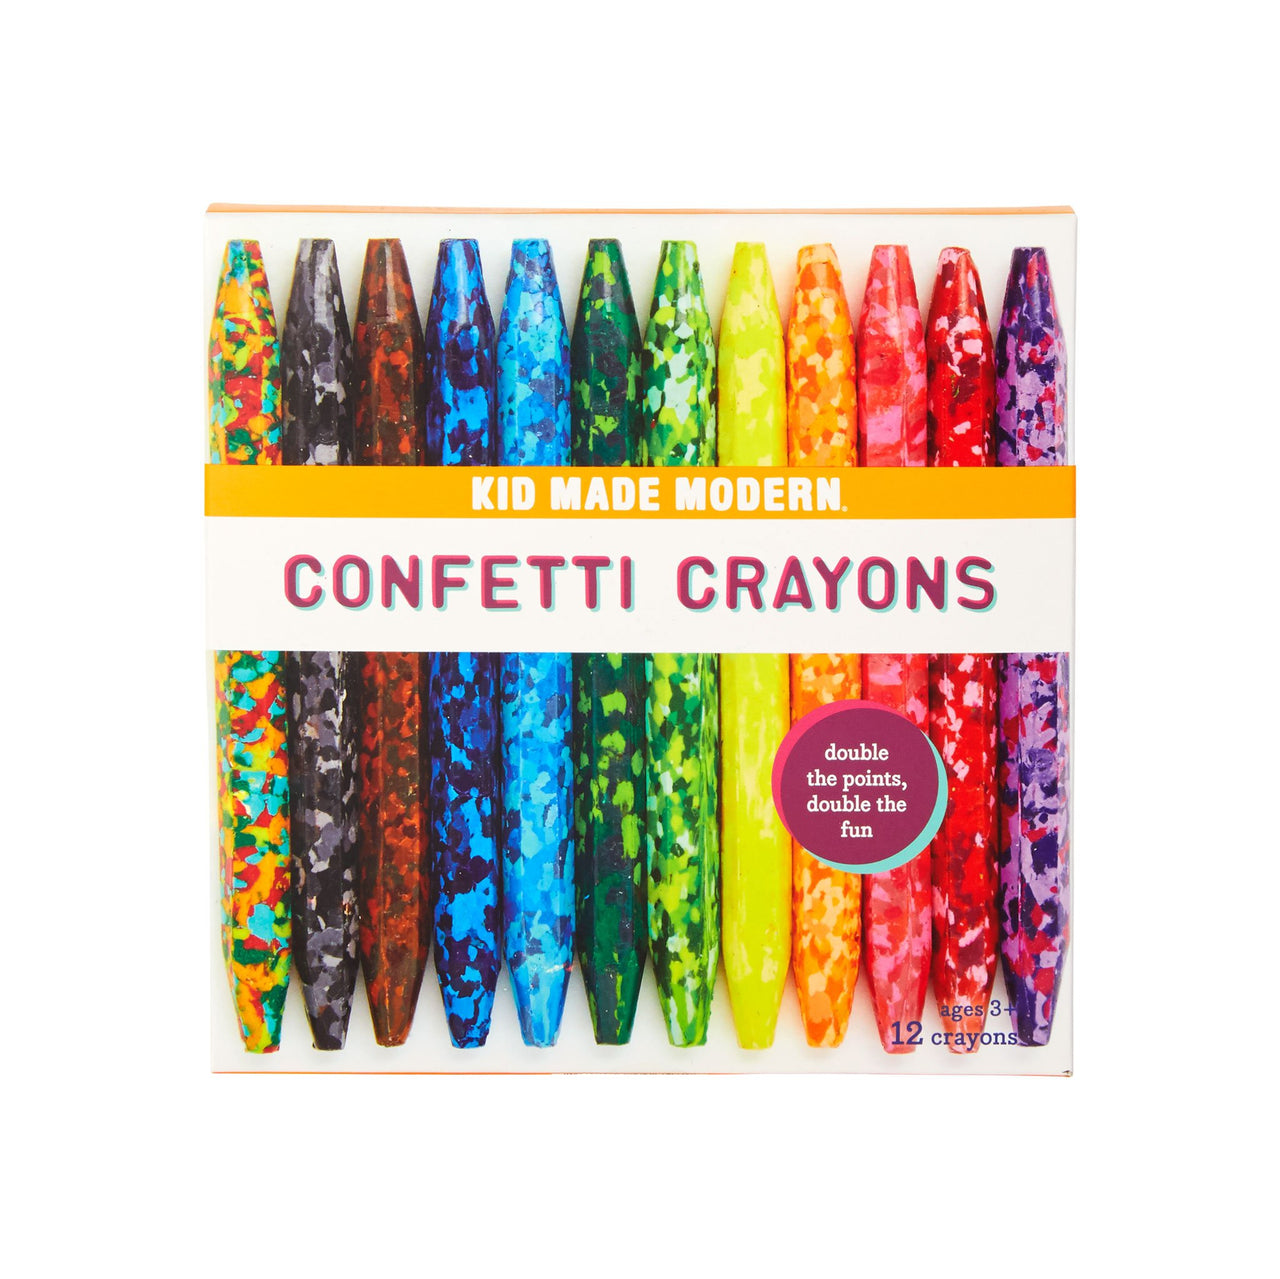 Kids Made Modern  confetti crayons